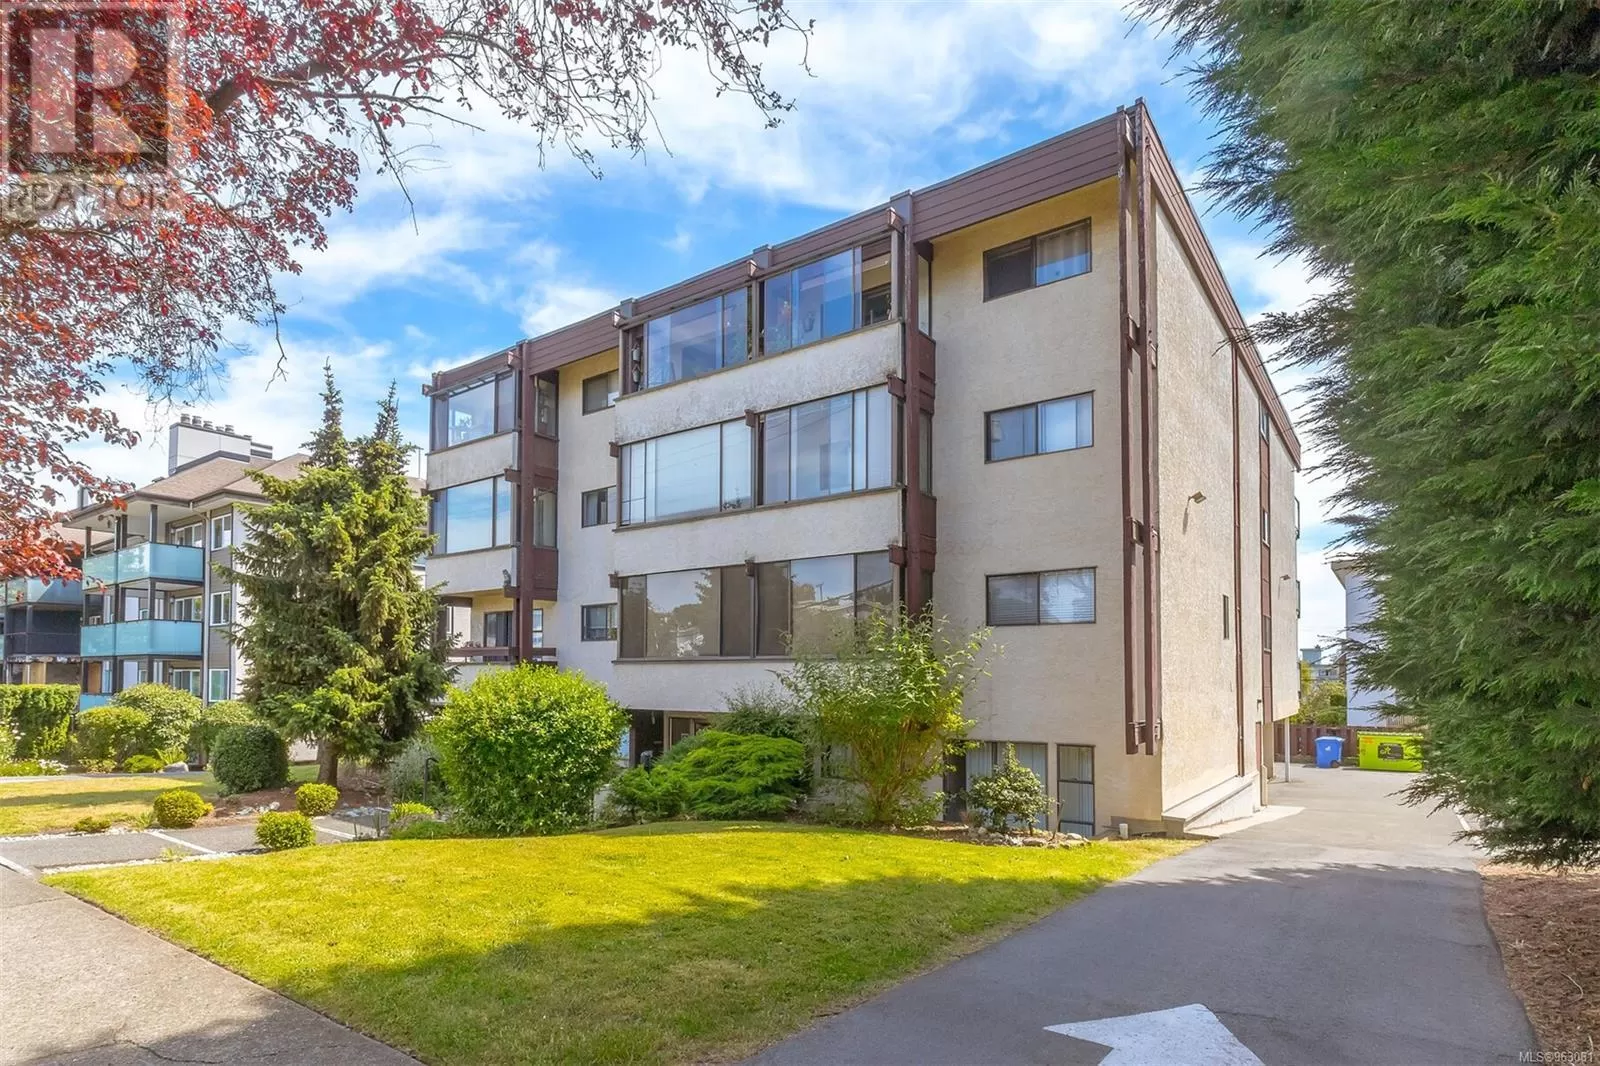 Apartment for rent: 203 1537 Morrison St, Victoria, British Columbia V8R 4K1